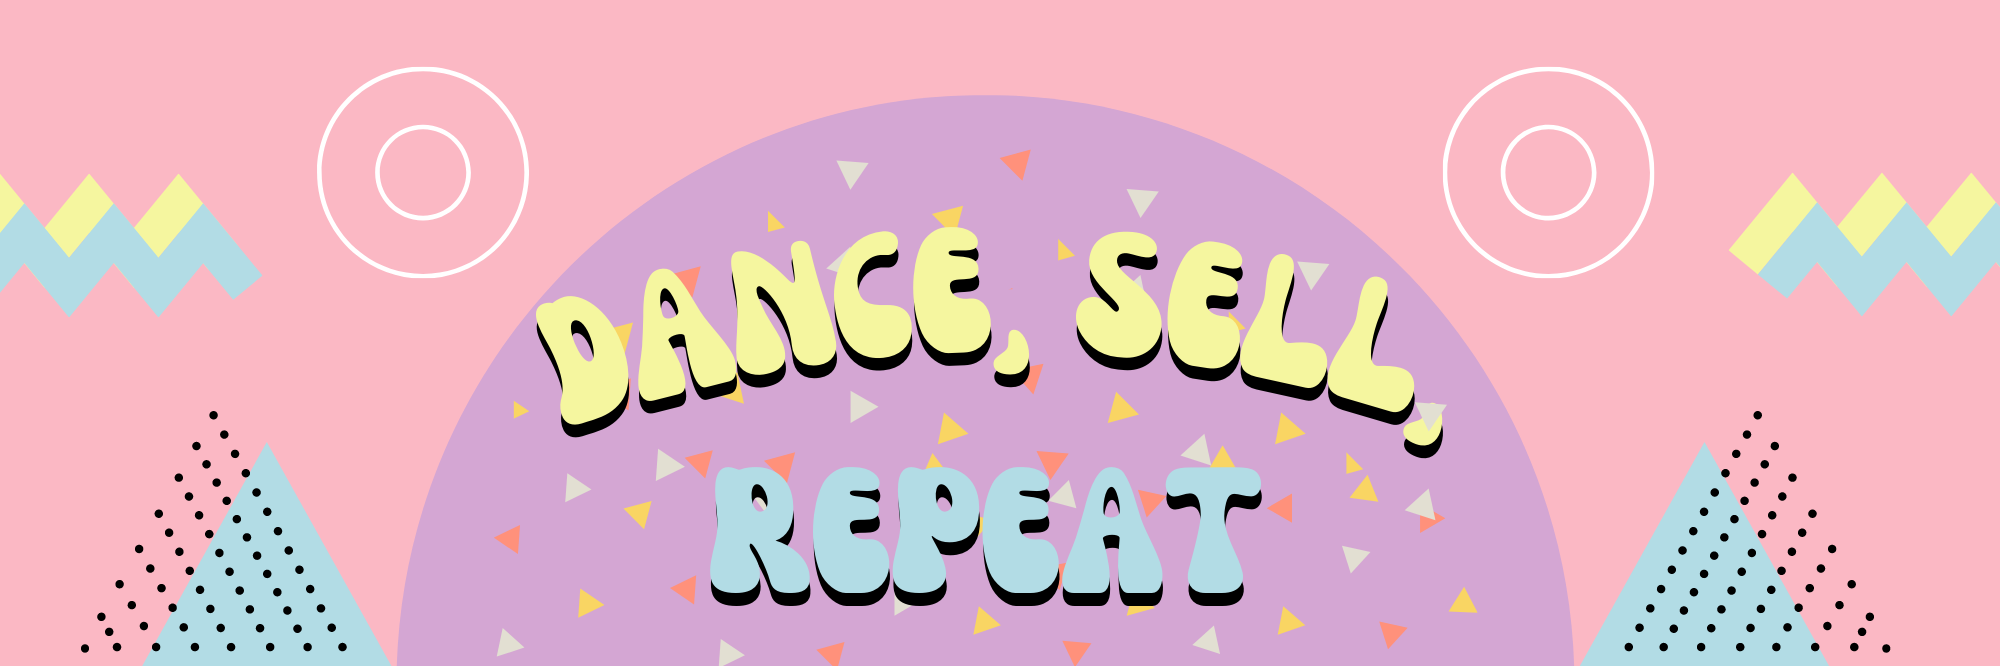 Dance, Sell, Repeat